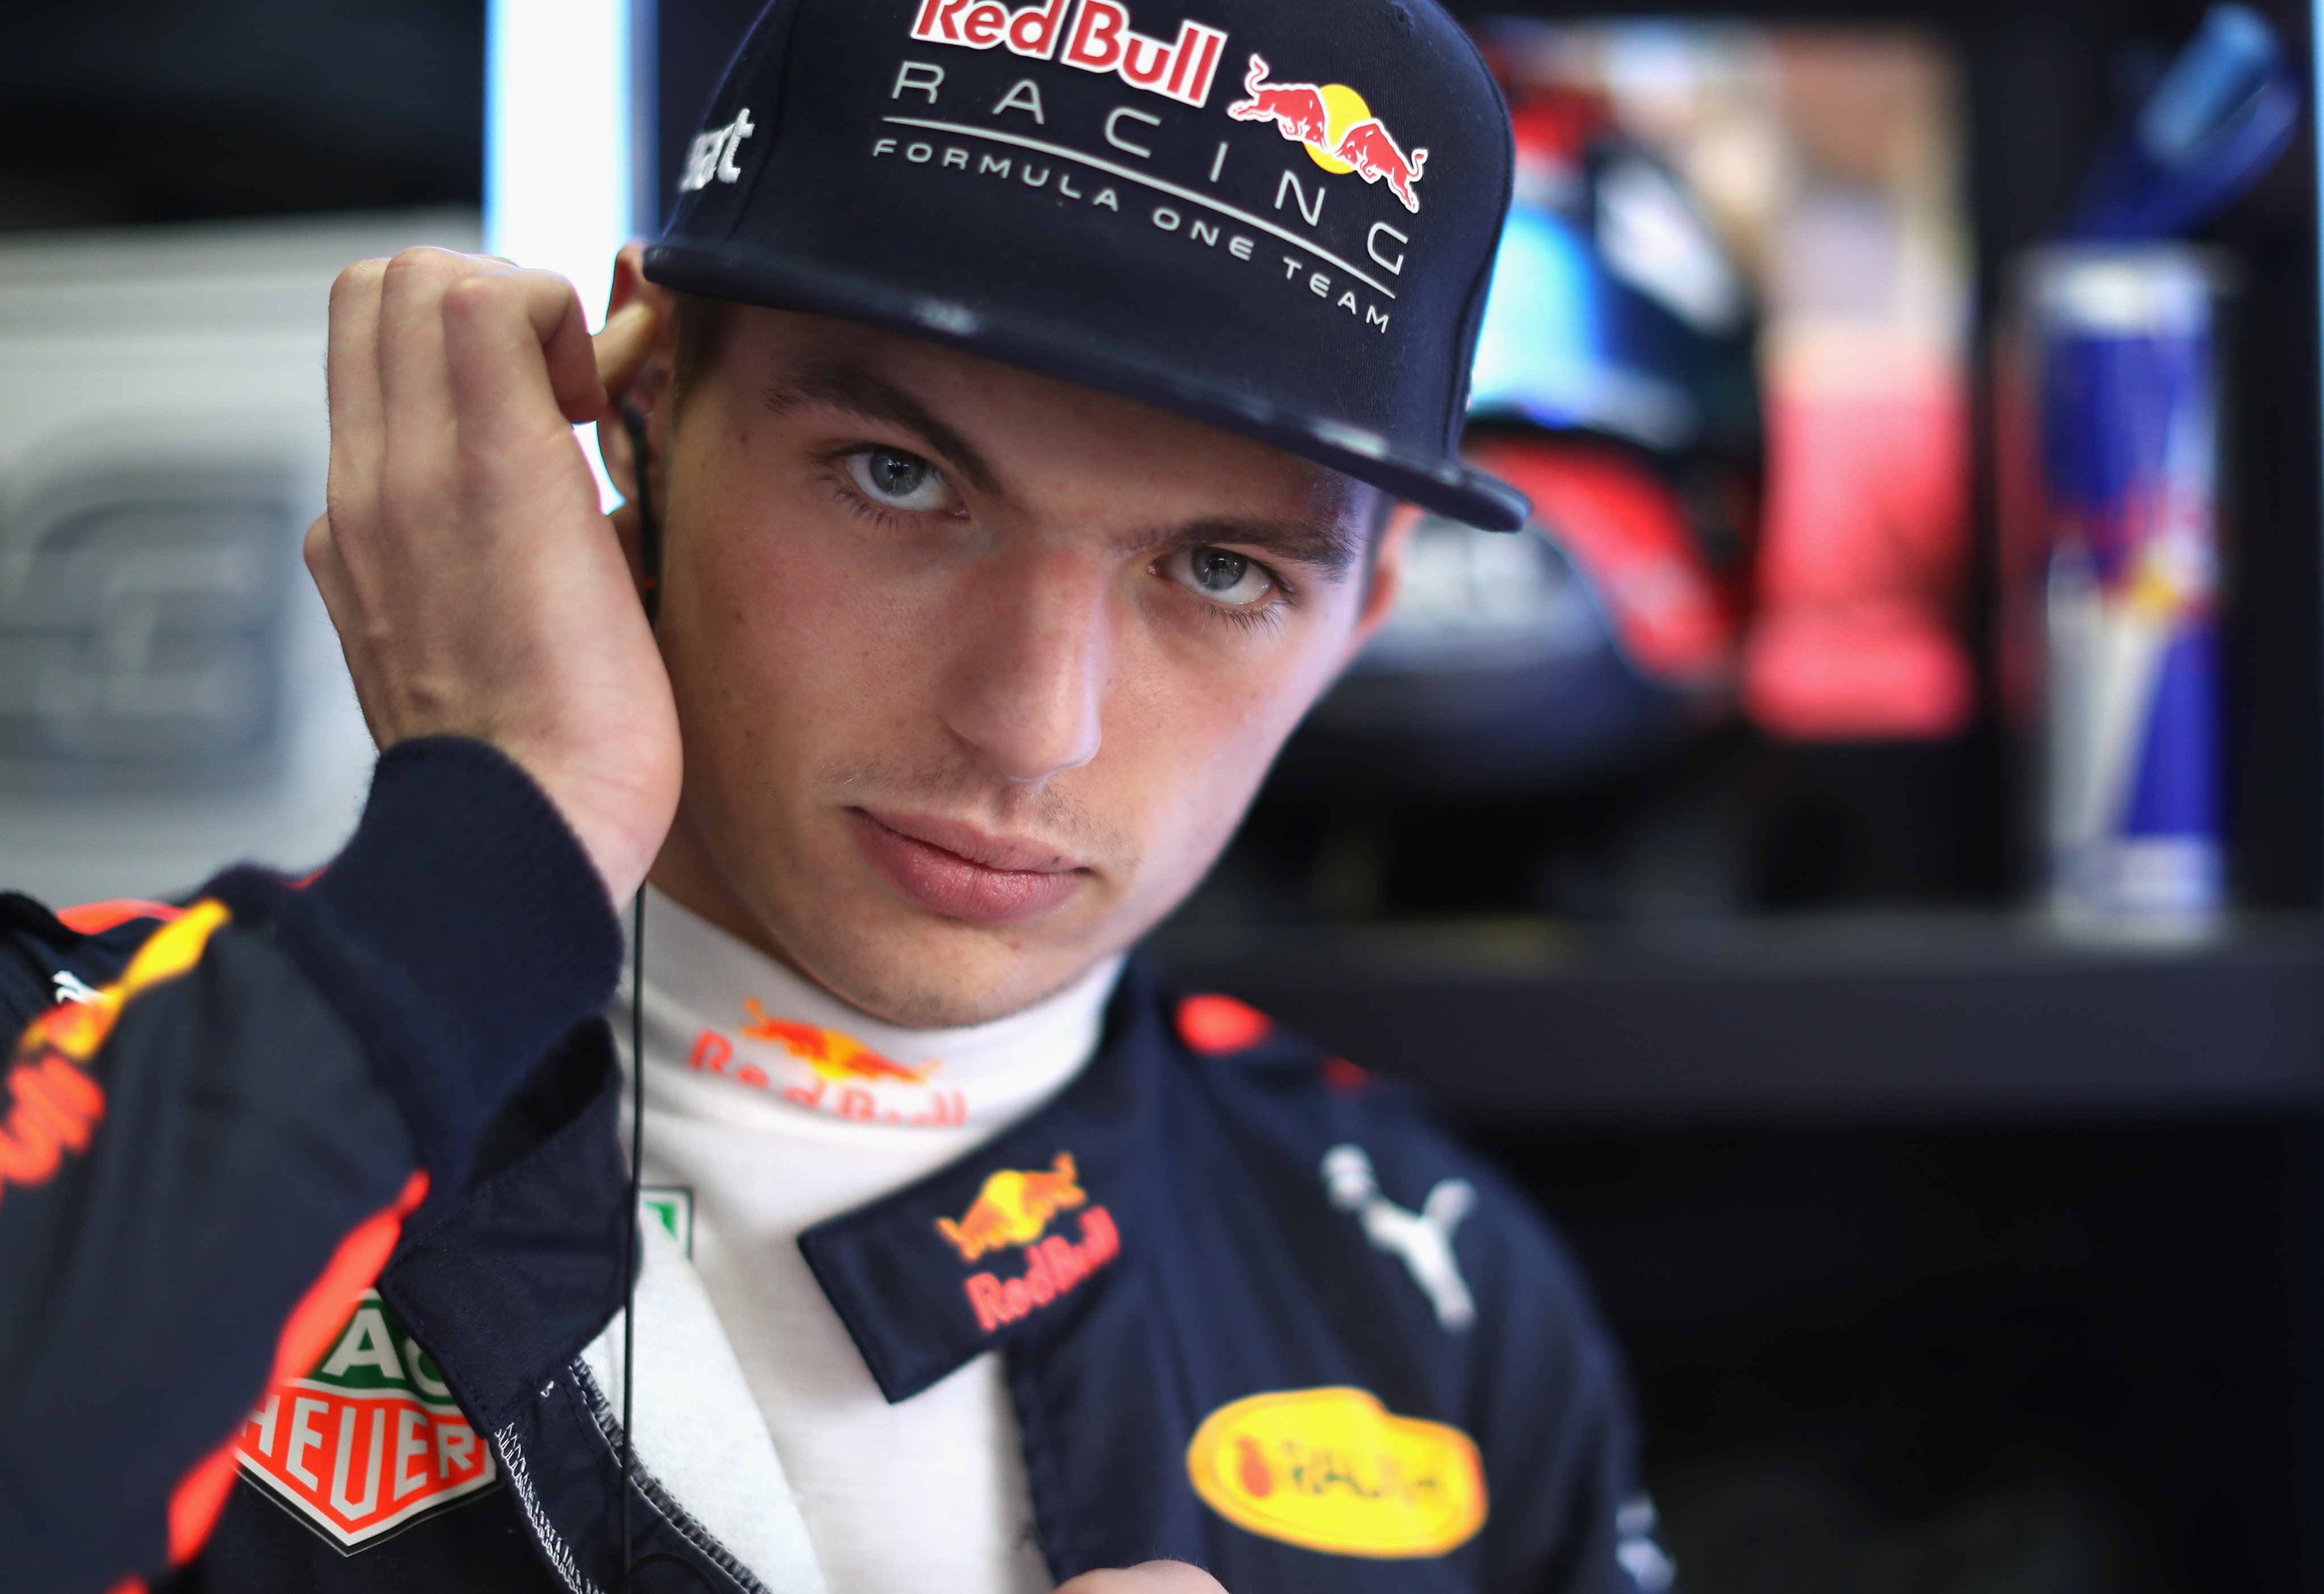 F1 News: Max Verstappen Reveals Special Helmet Design For Upcoming